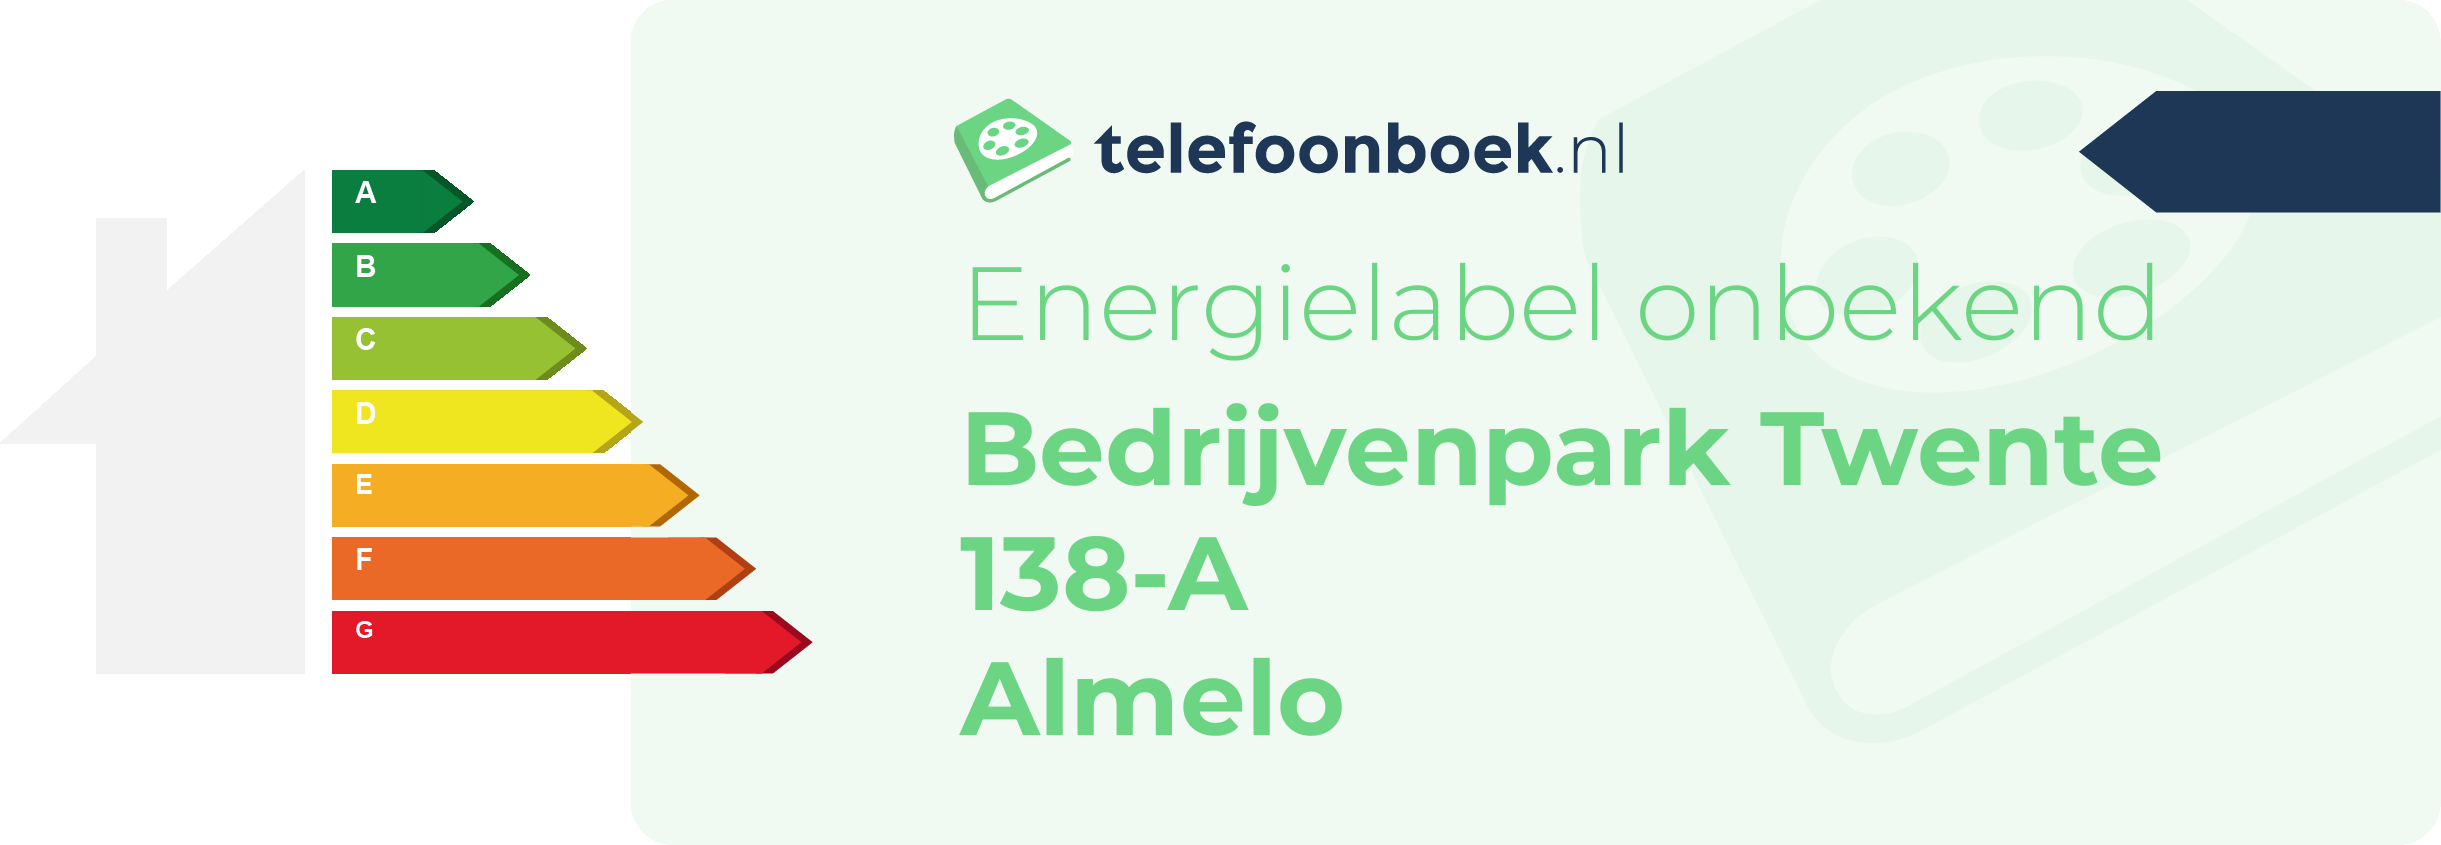 Energielabel Bedrijvenpark Twente 138-A Almelo